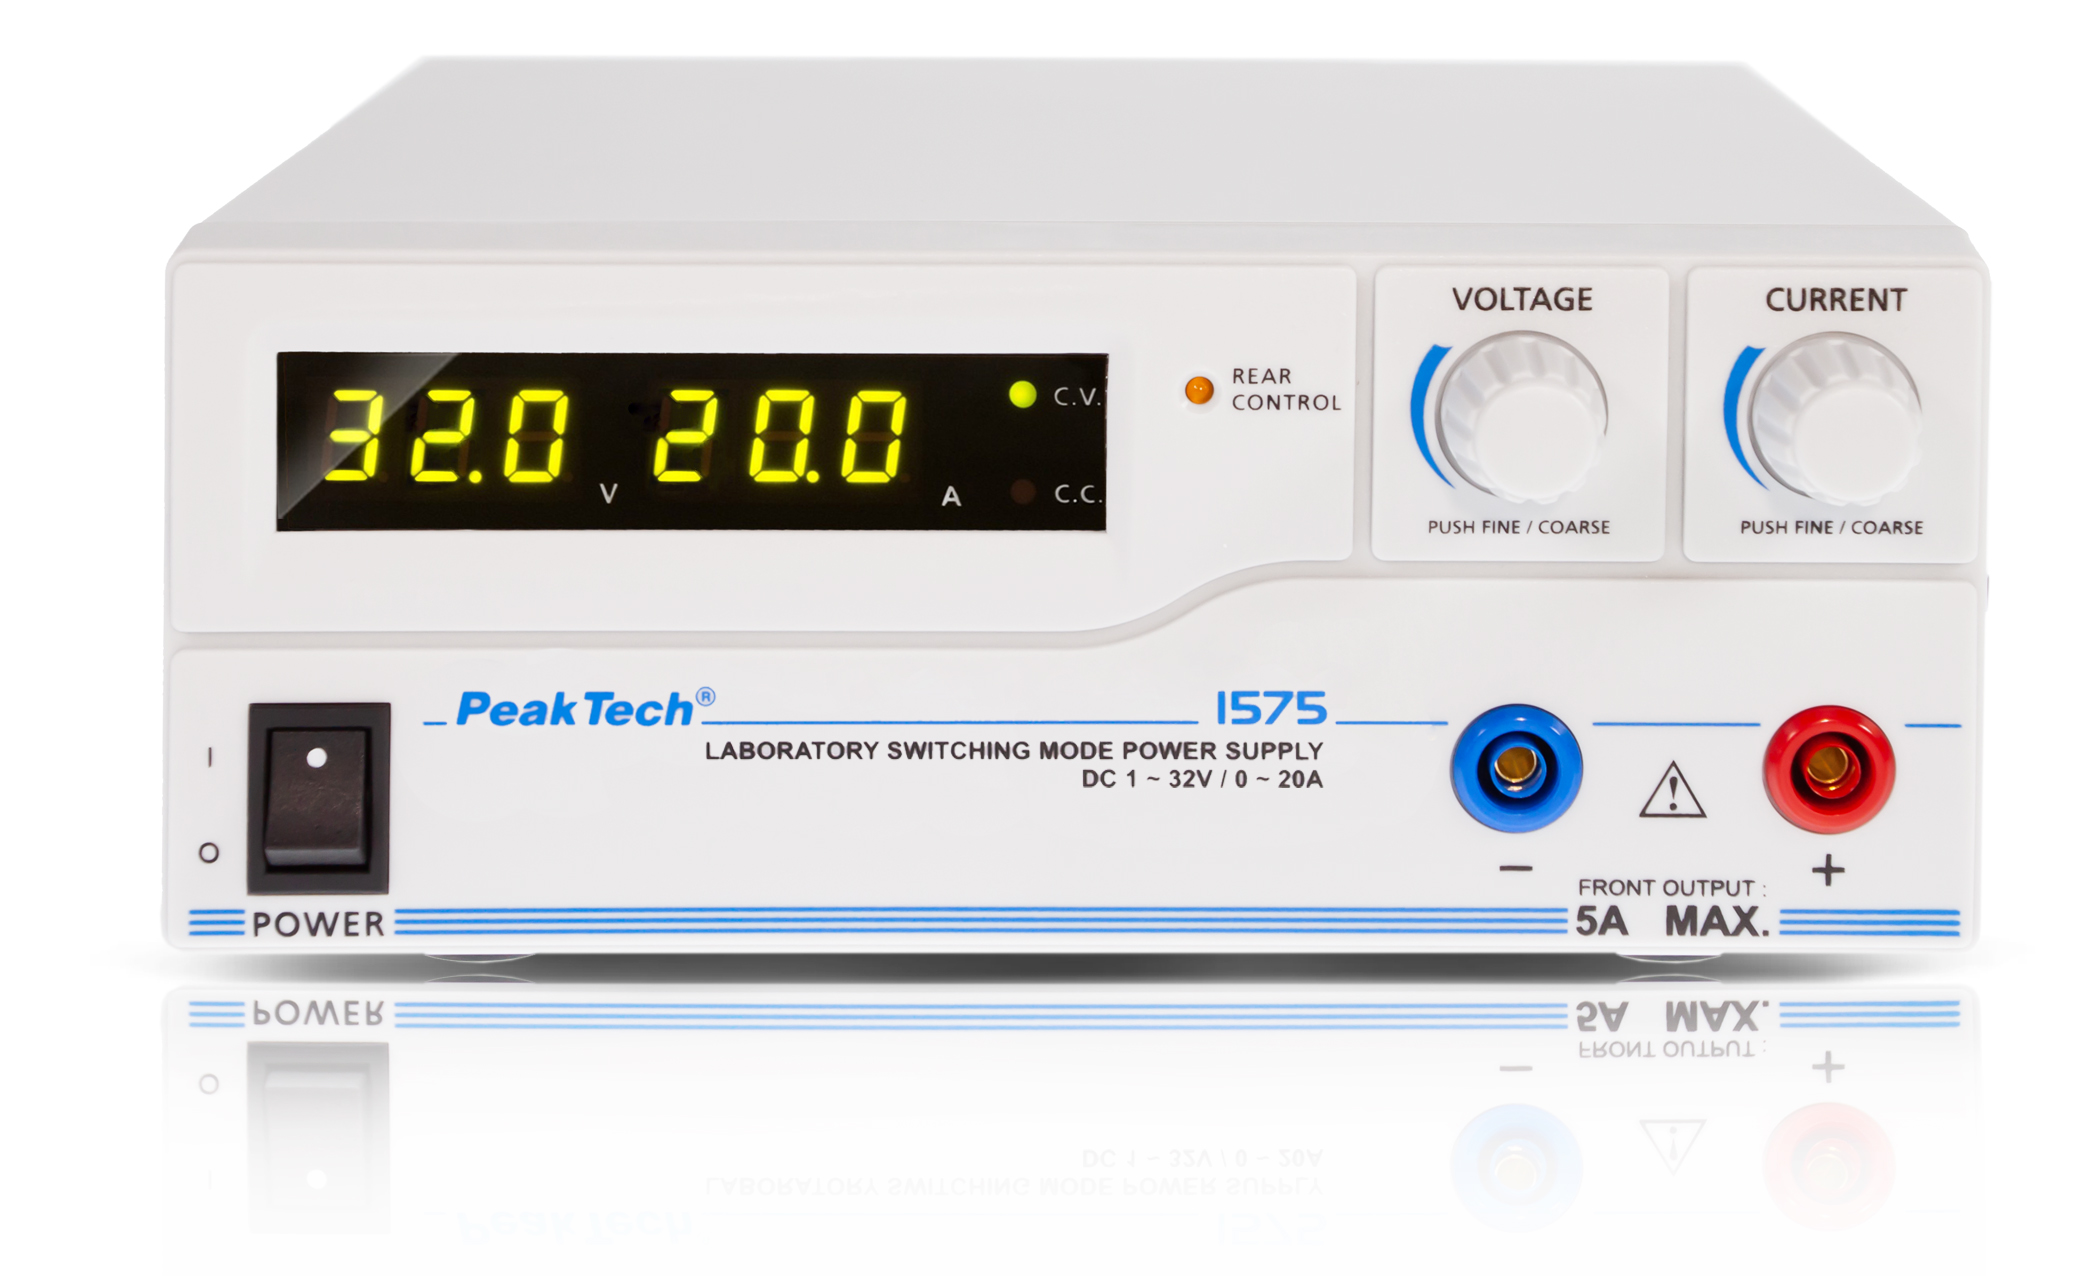 «PeakTech® P 1575» Laboratory power supply DC 1 - 32V / 0 - 20A & USB